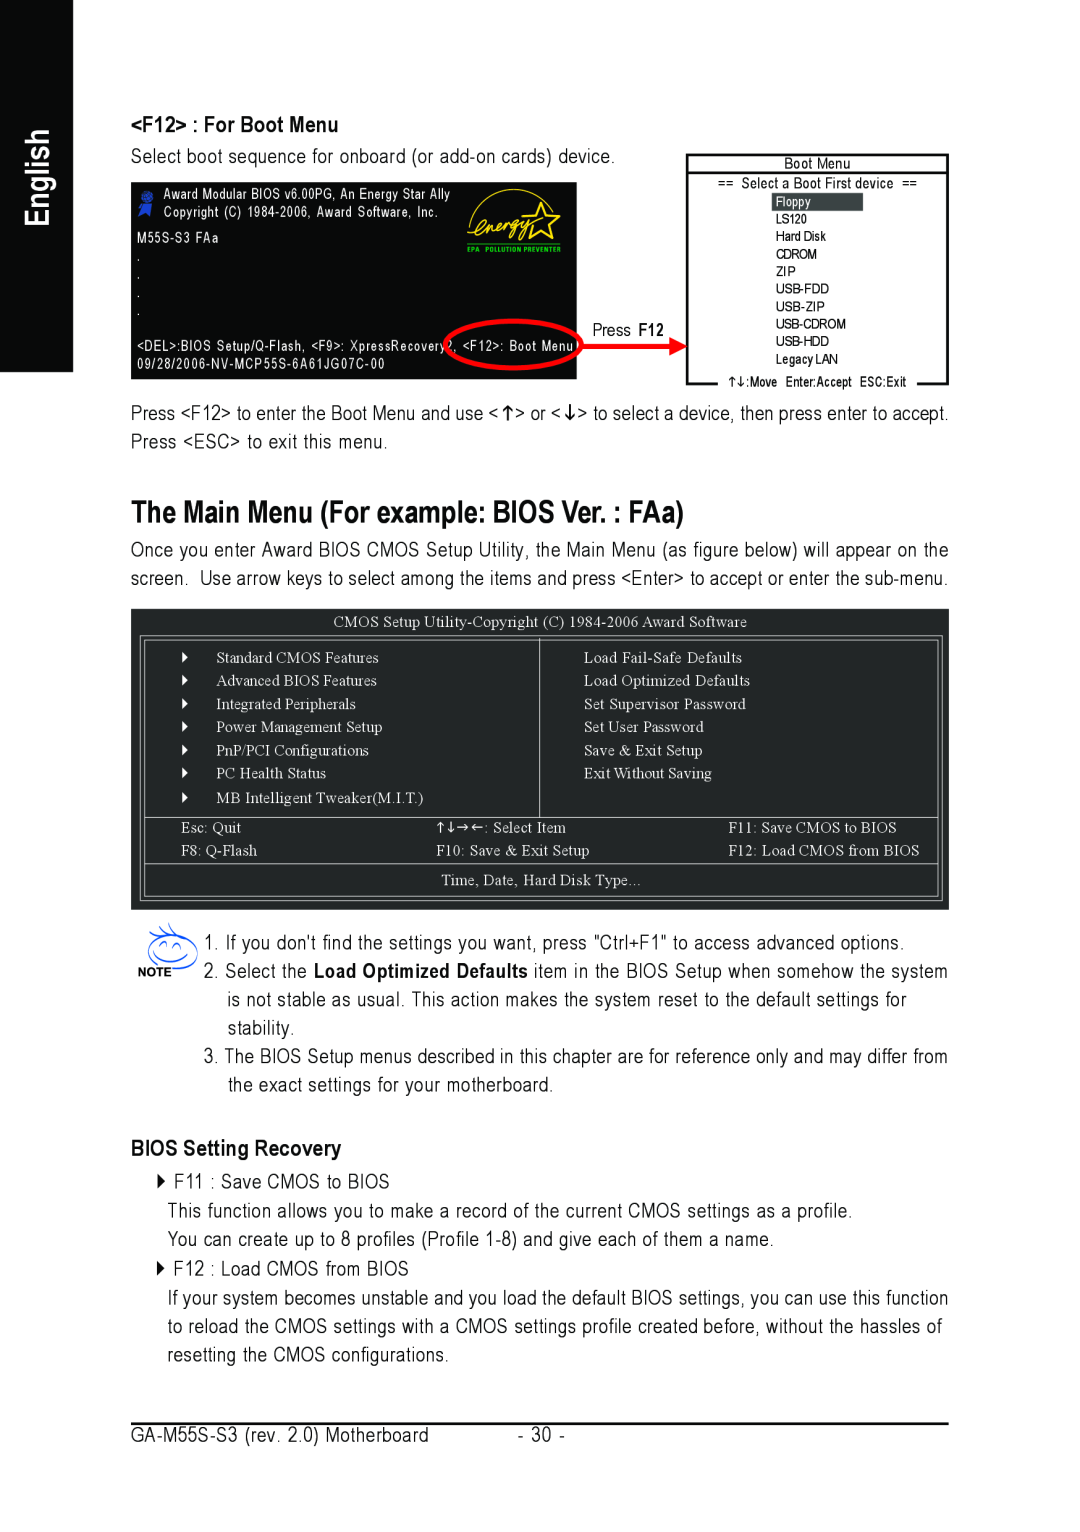 Gigabyte GA-M55S-S3 user manual The Main Menu For example BIOS Ver. FAa, F12 For Boot Menu, BIOS Setting Recovery, English 